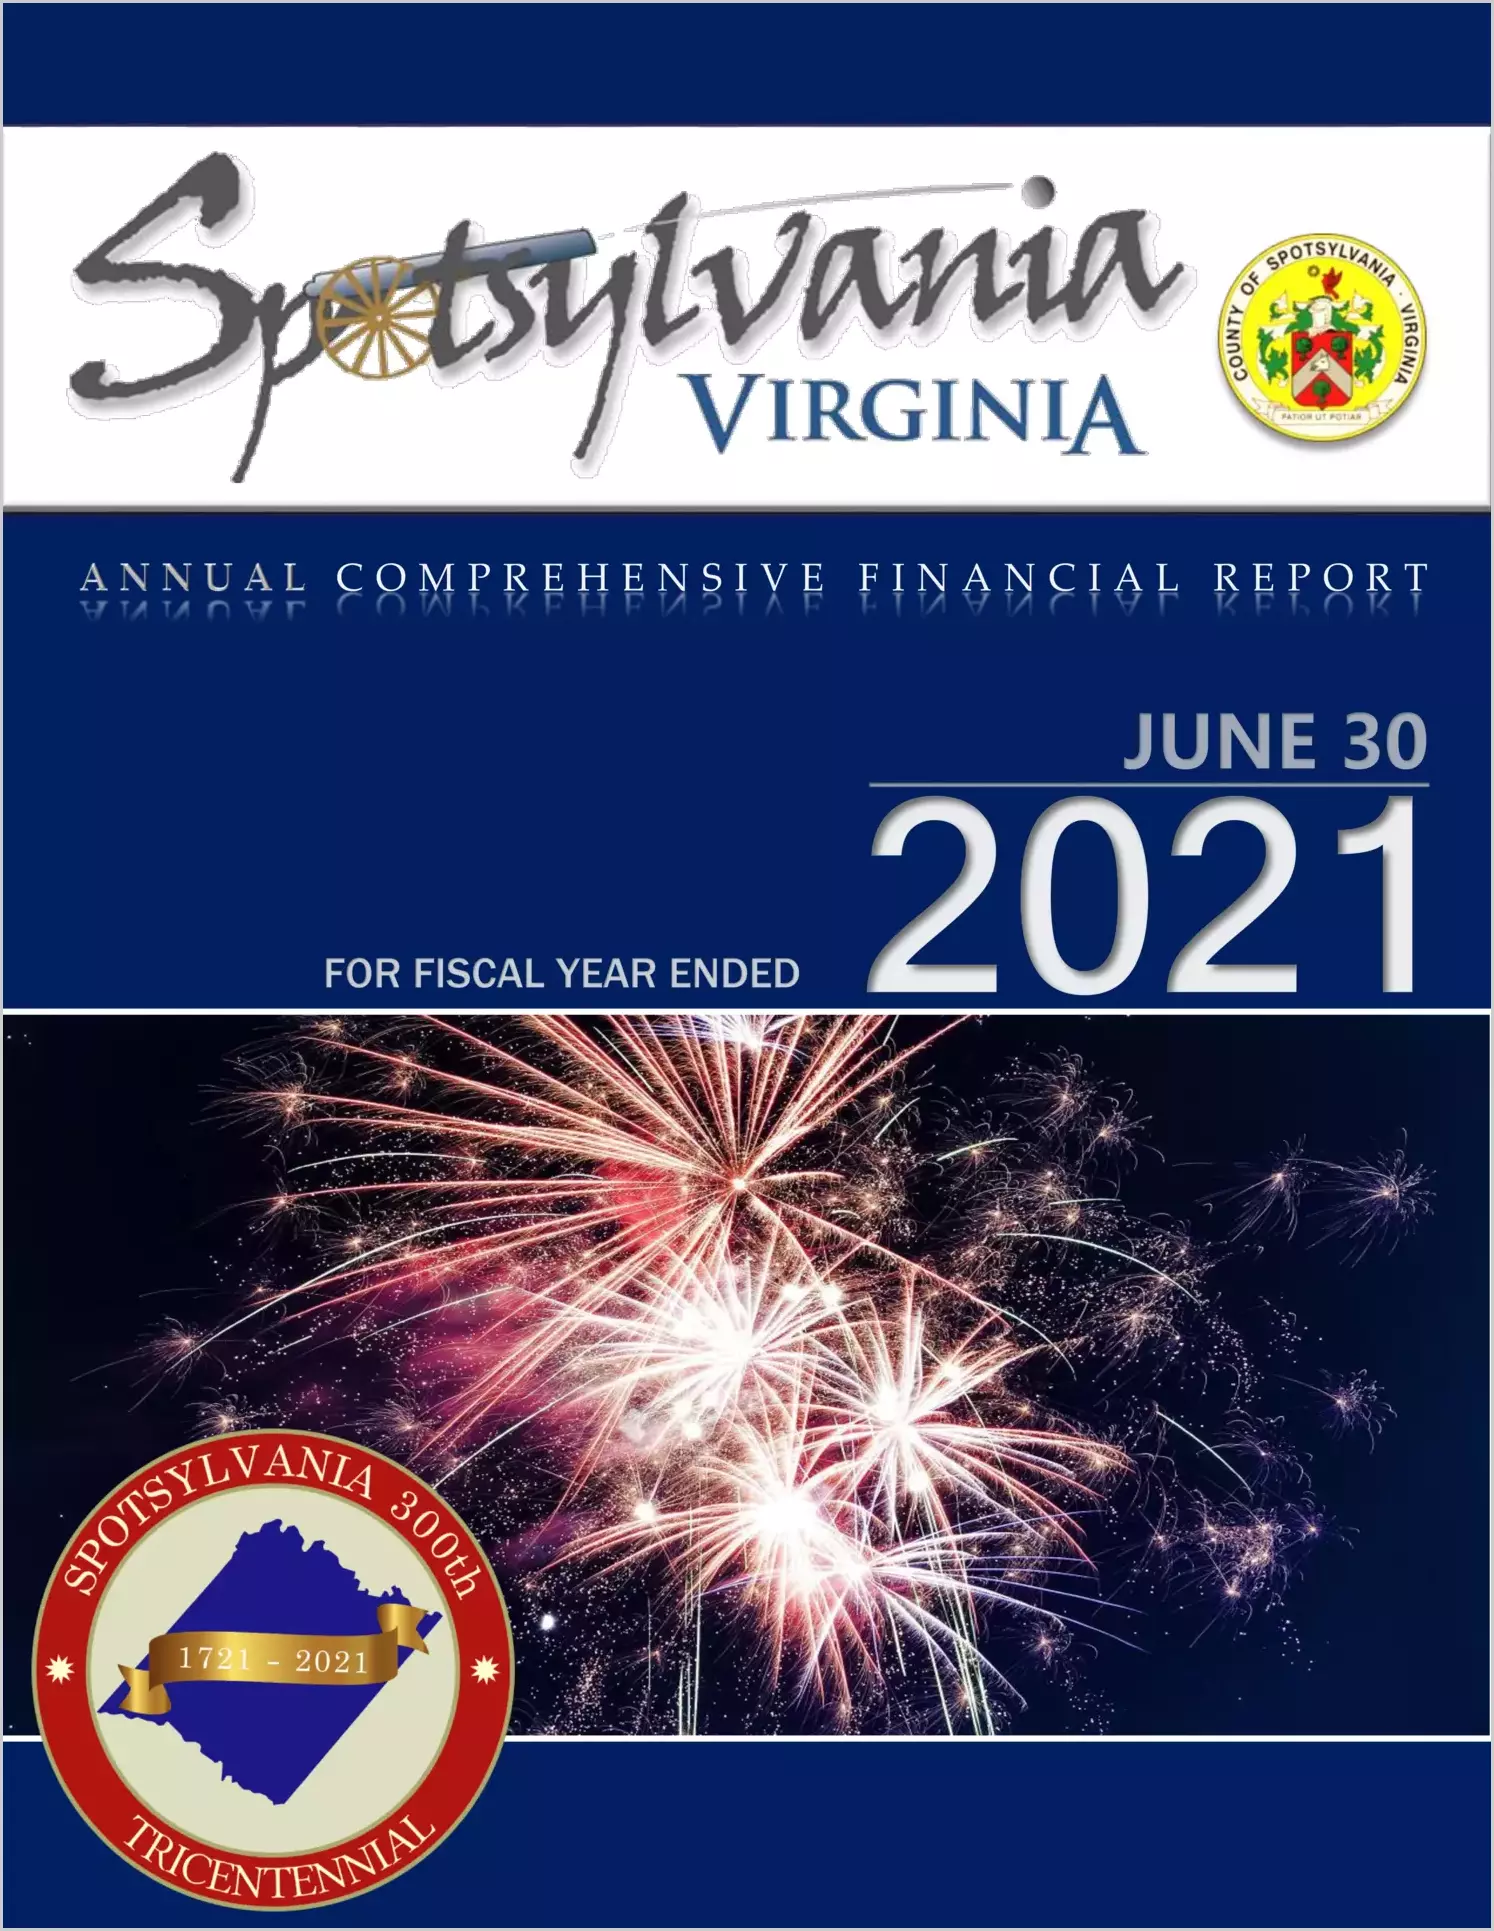 2021 Annual Financial Report for County of Spotsylvania